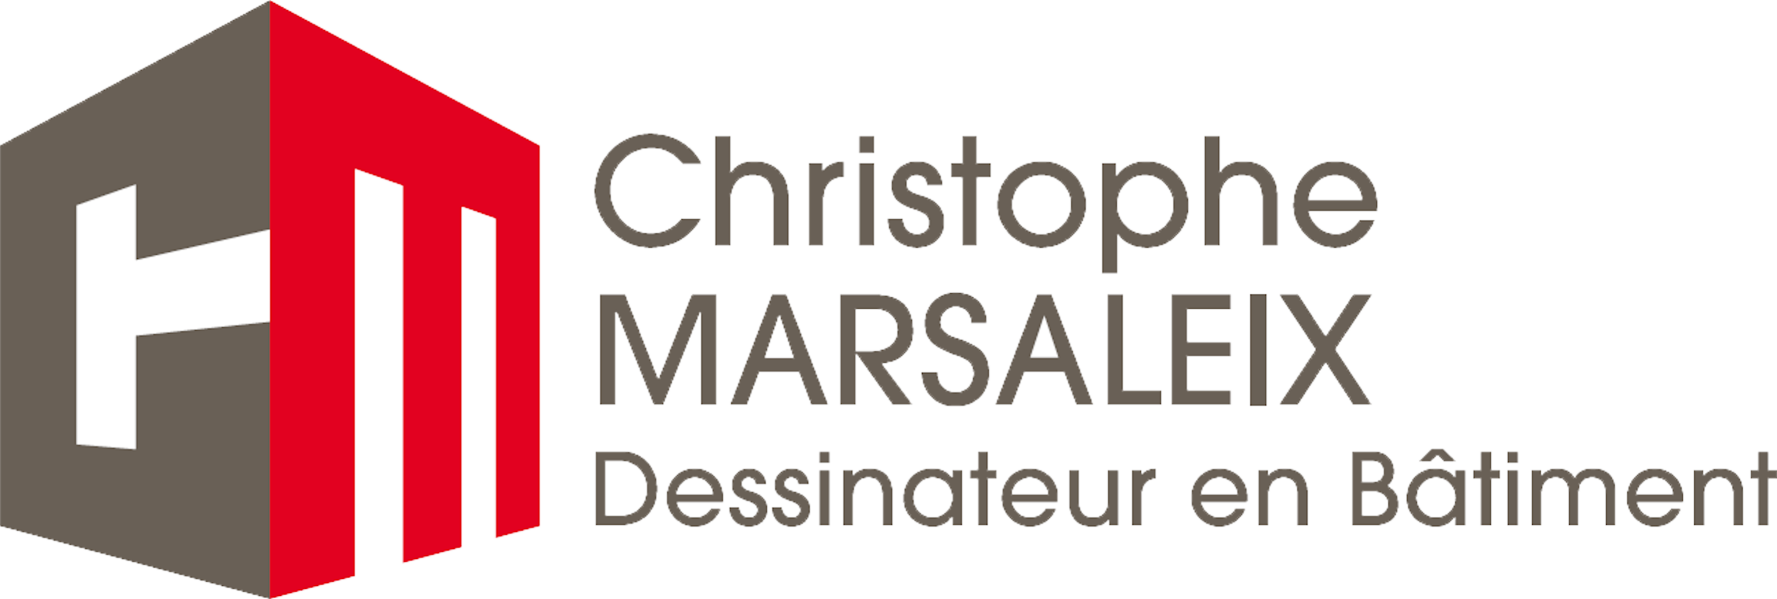 Christophe Marsaleix - Nos partenaires